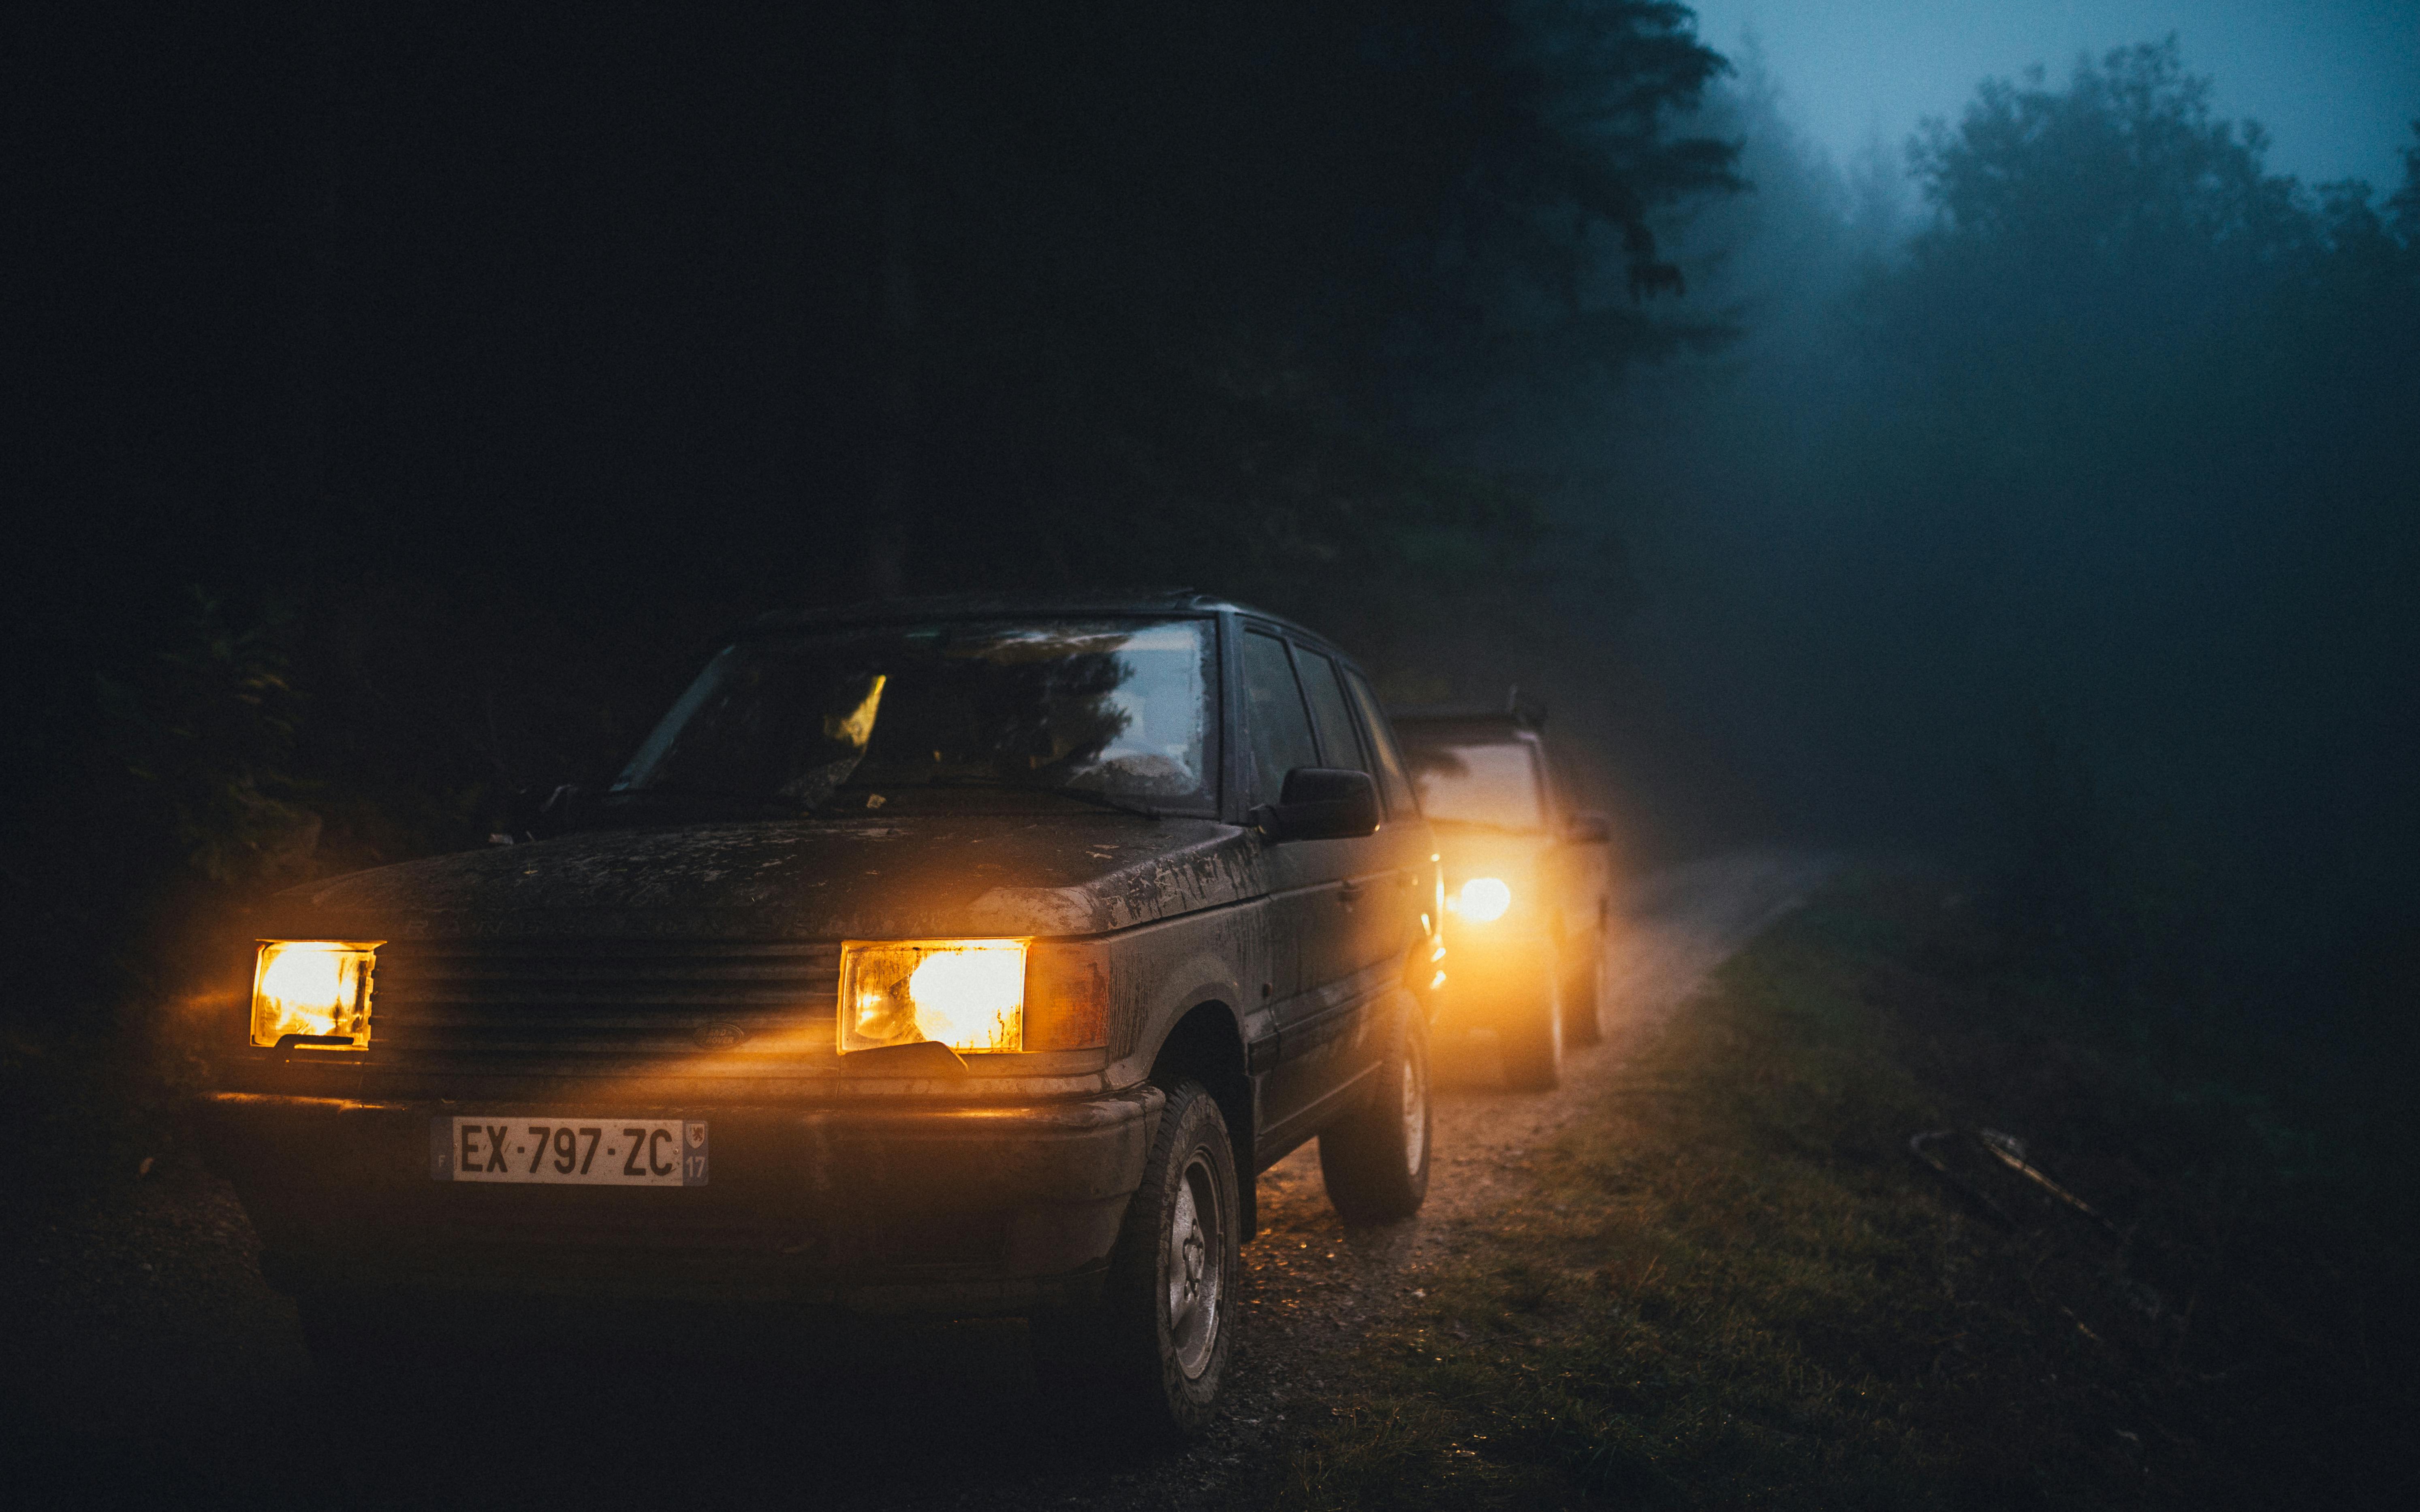 Free stock photo of #landrover #p39 #night #fog #smoke #forest #mud